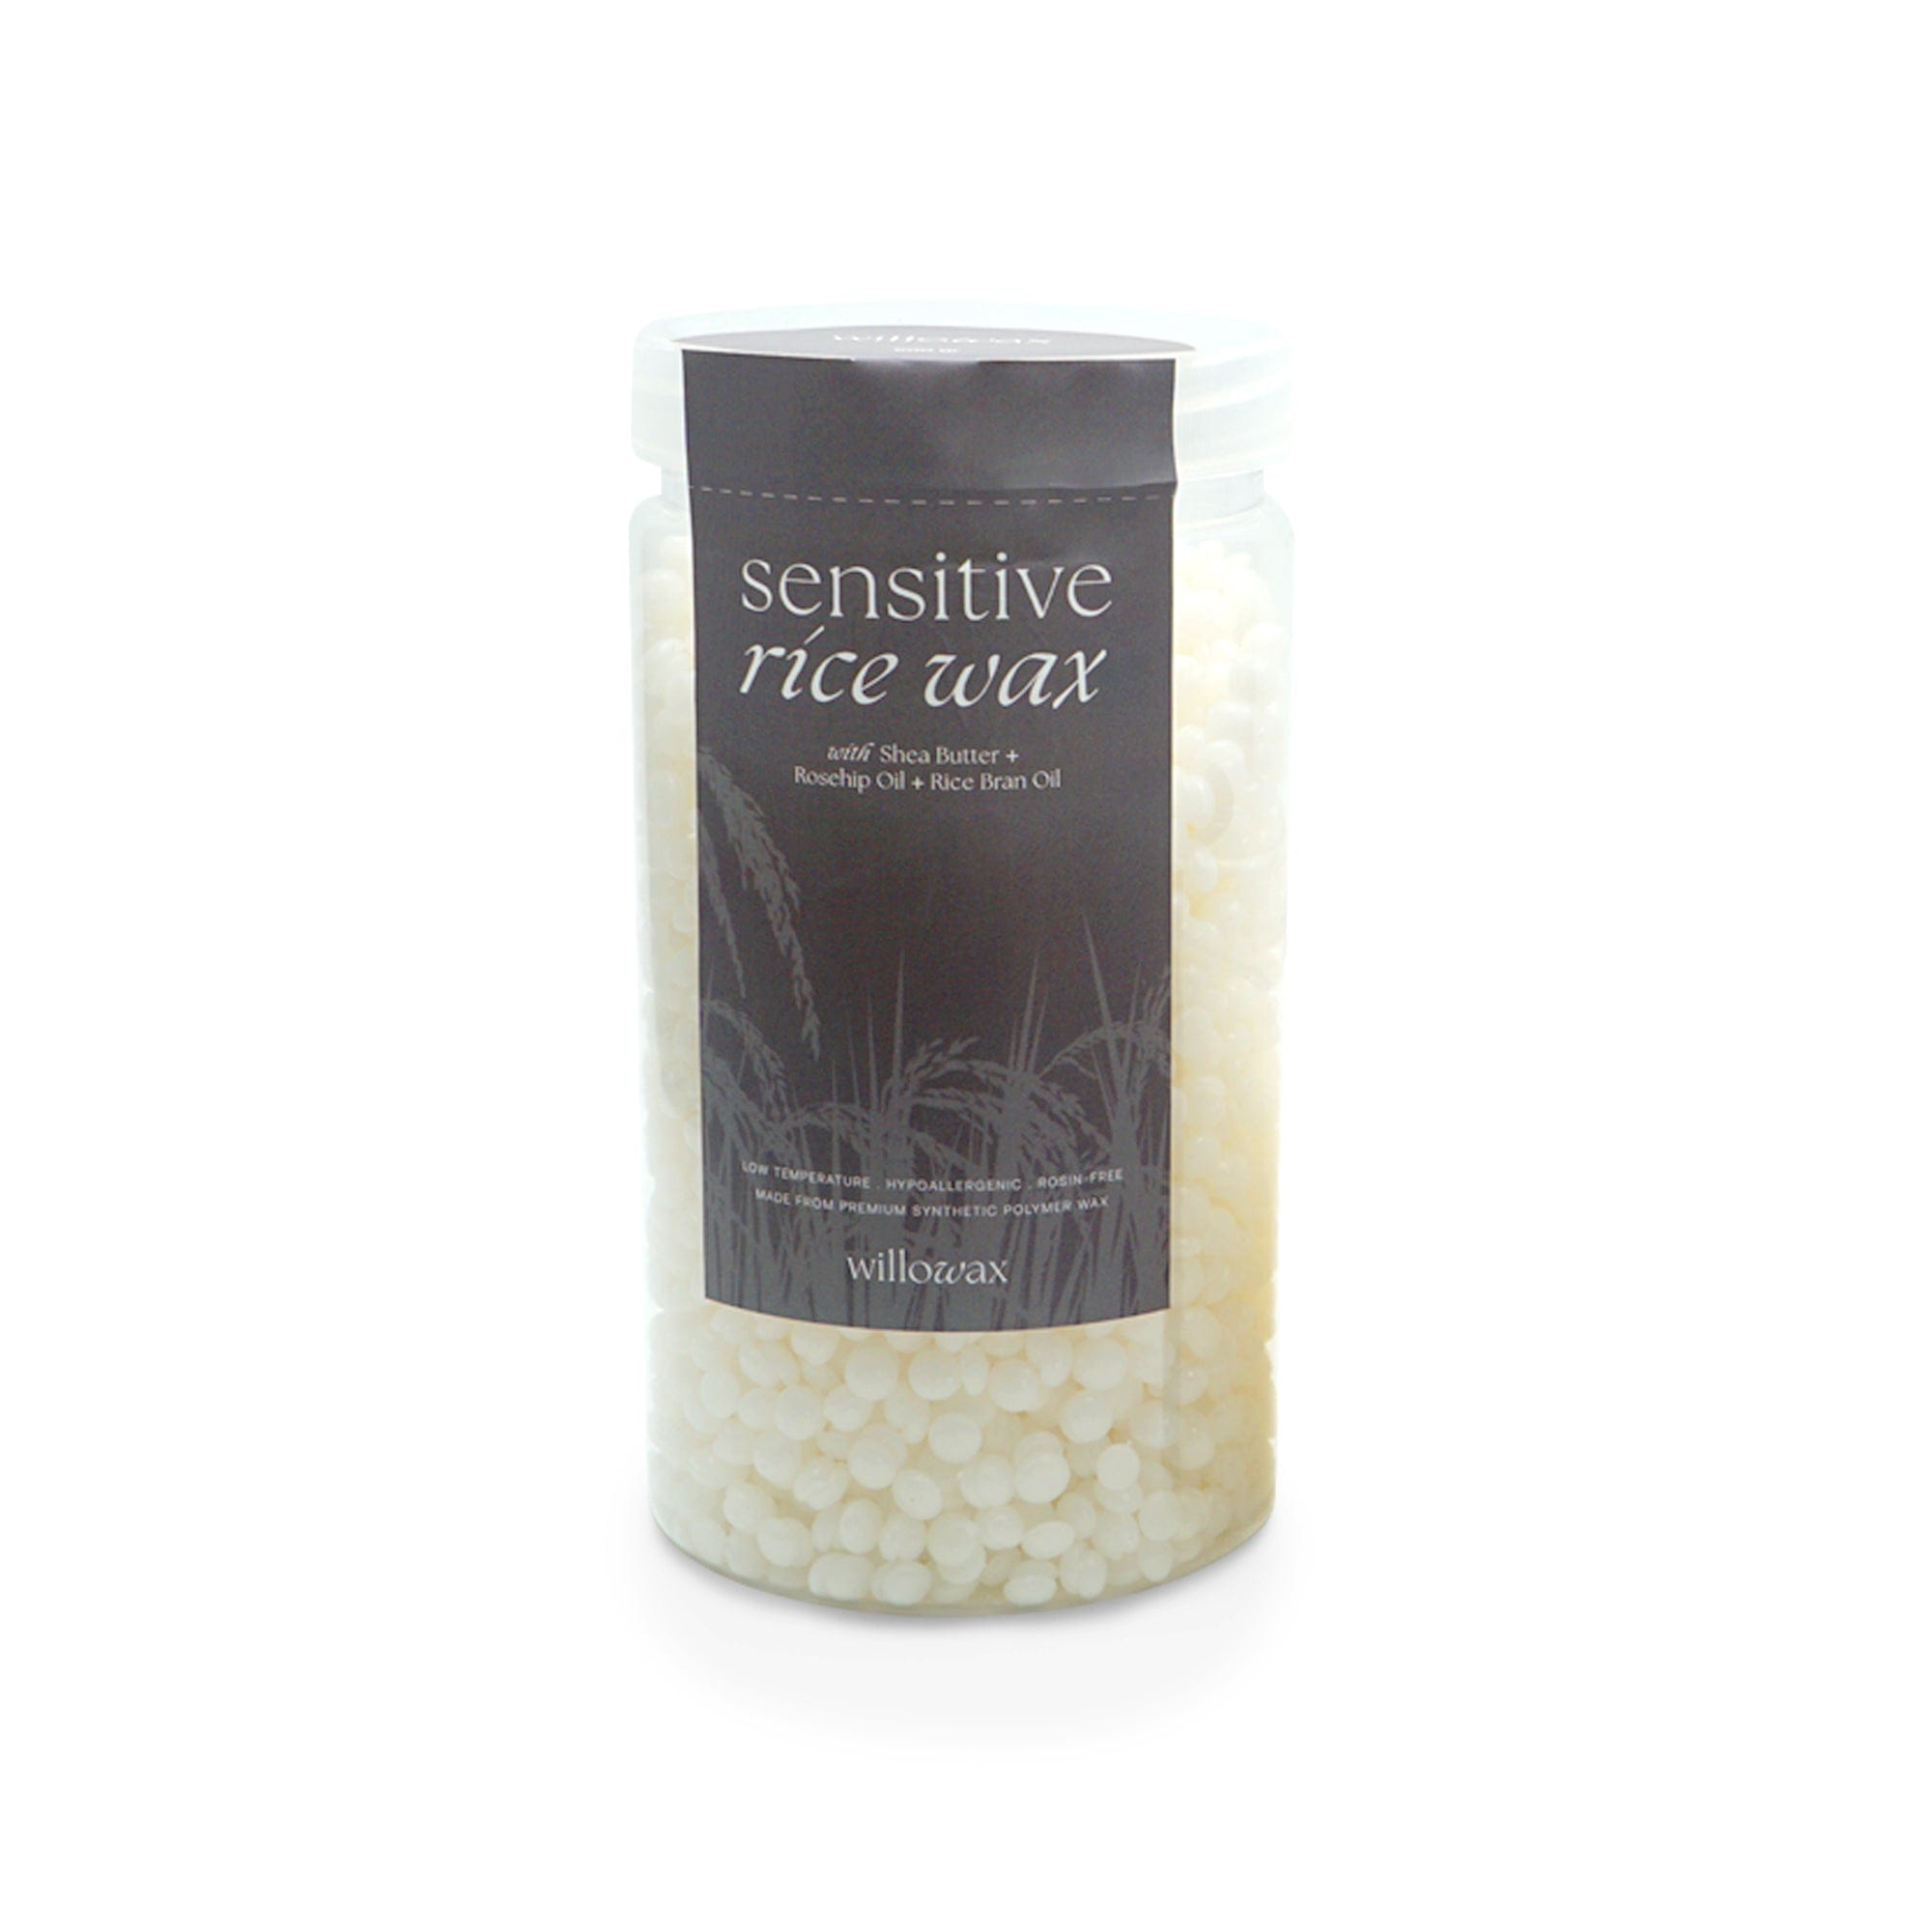 Lavere Lash - Willowax Sensitive Rice Wax With Shea Butter, Rosehip Oil & Rice Bran Oil | Sensitive Rice Wax - Lavere Lash